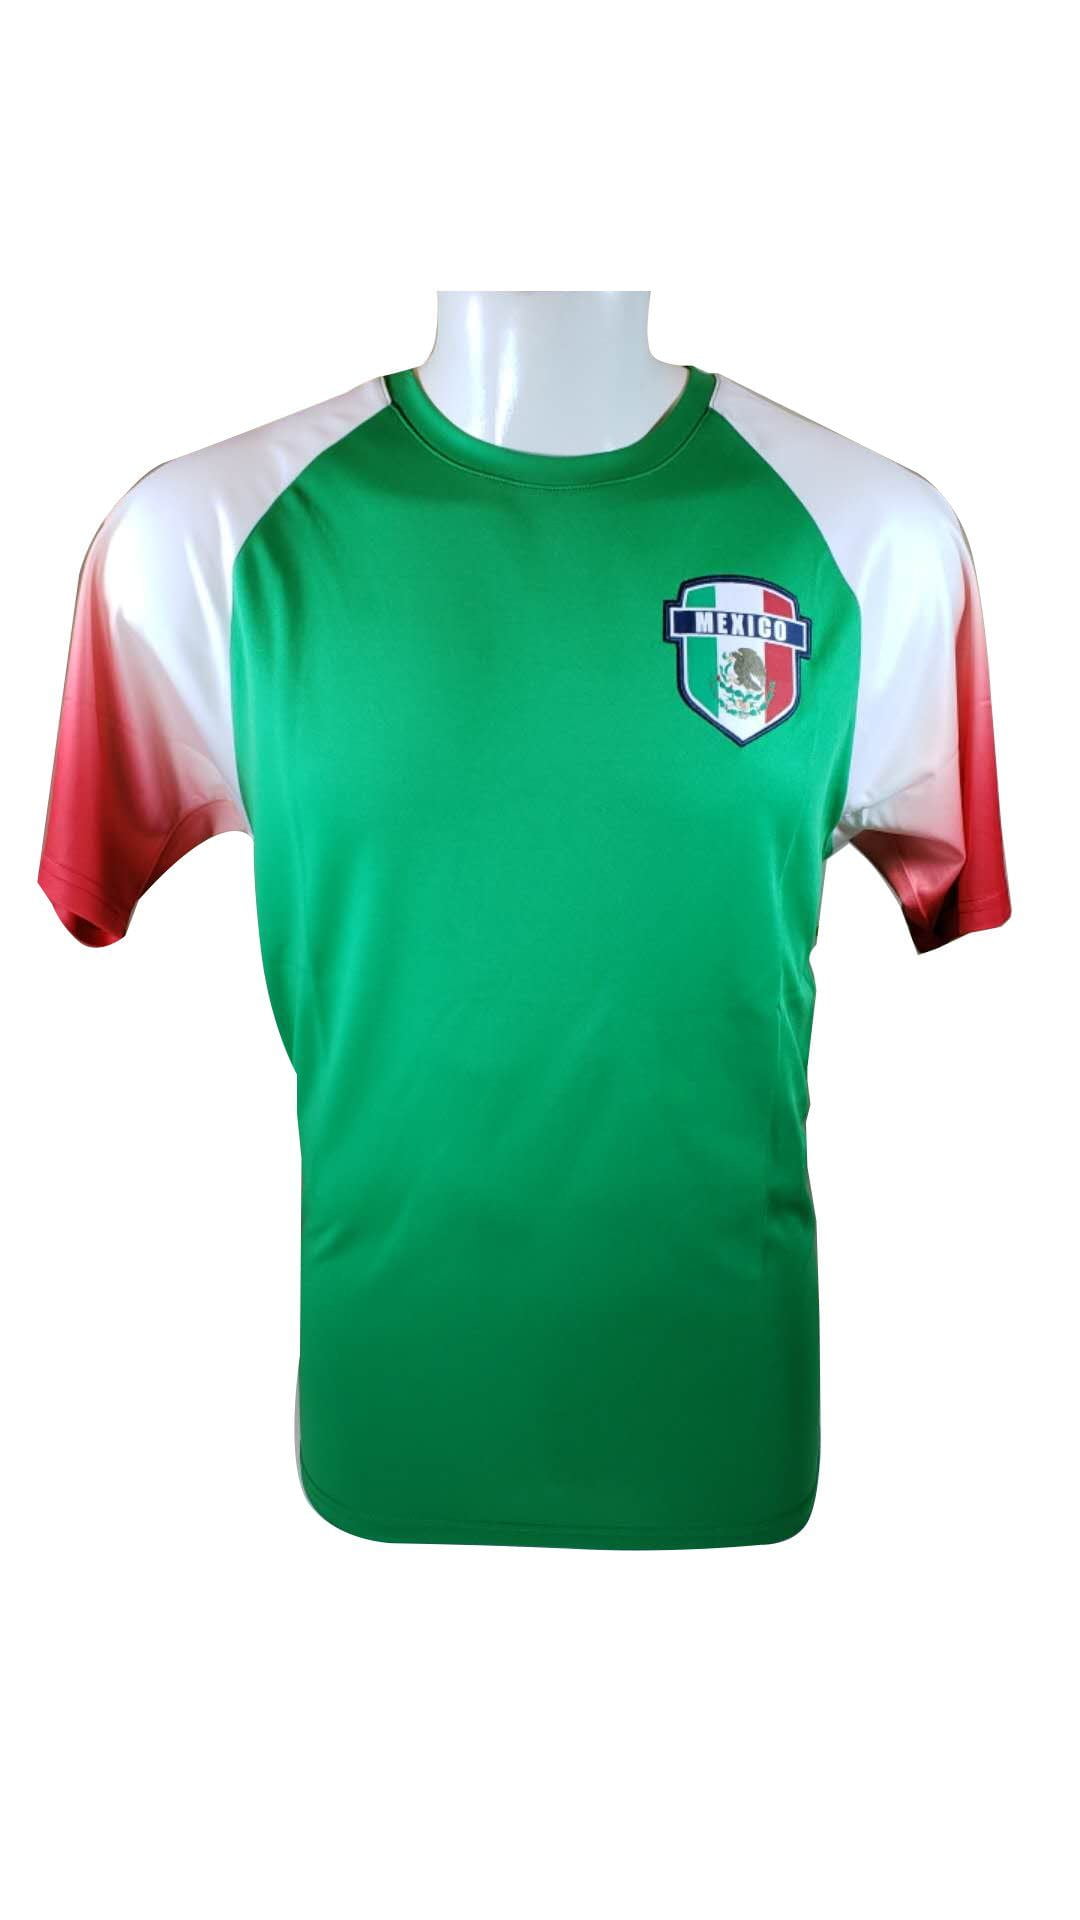 mexico soccer team new shirt